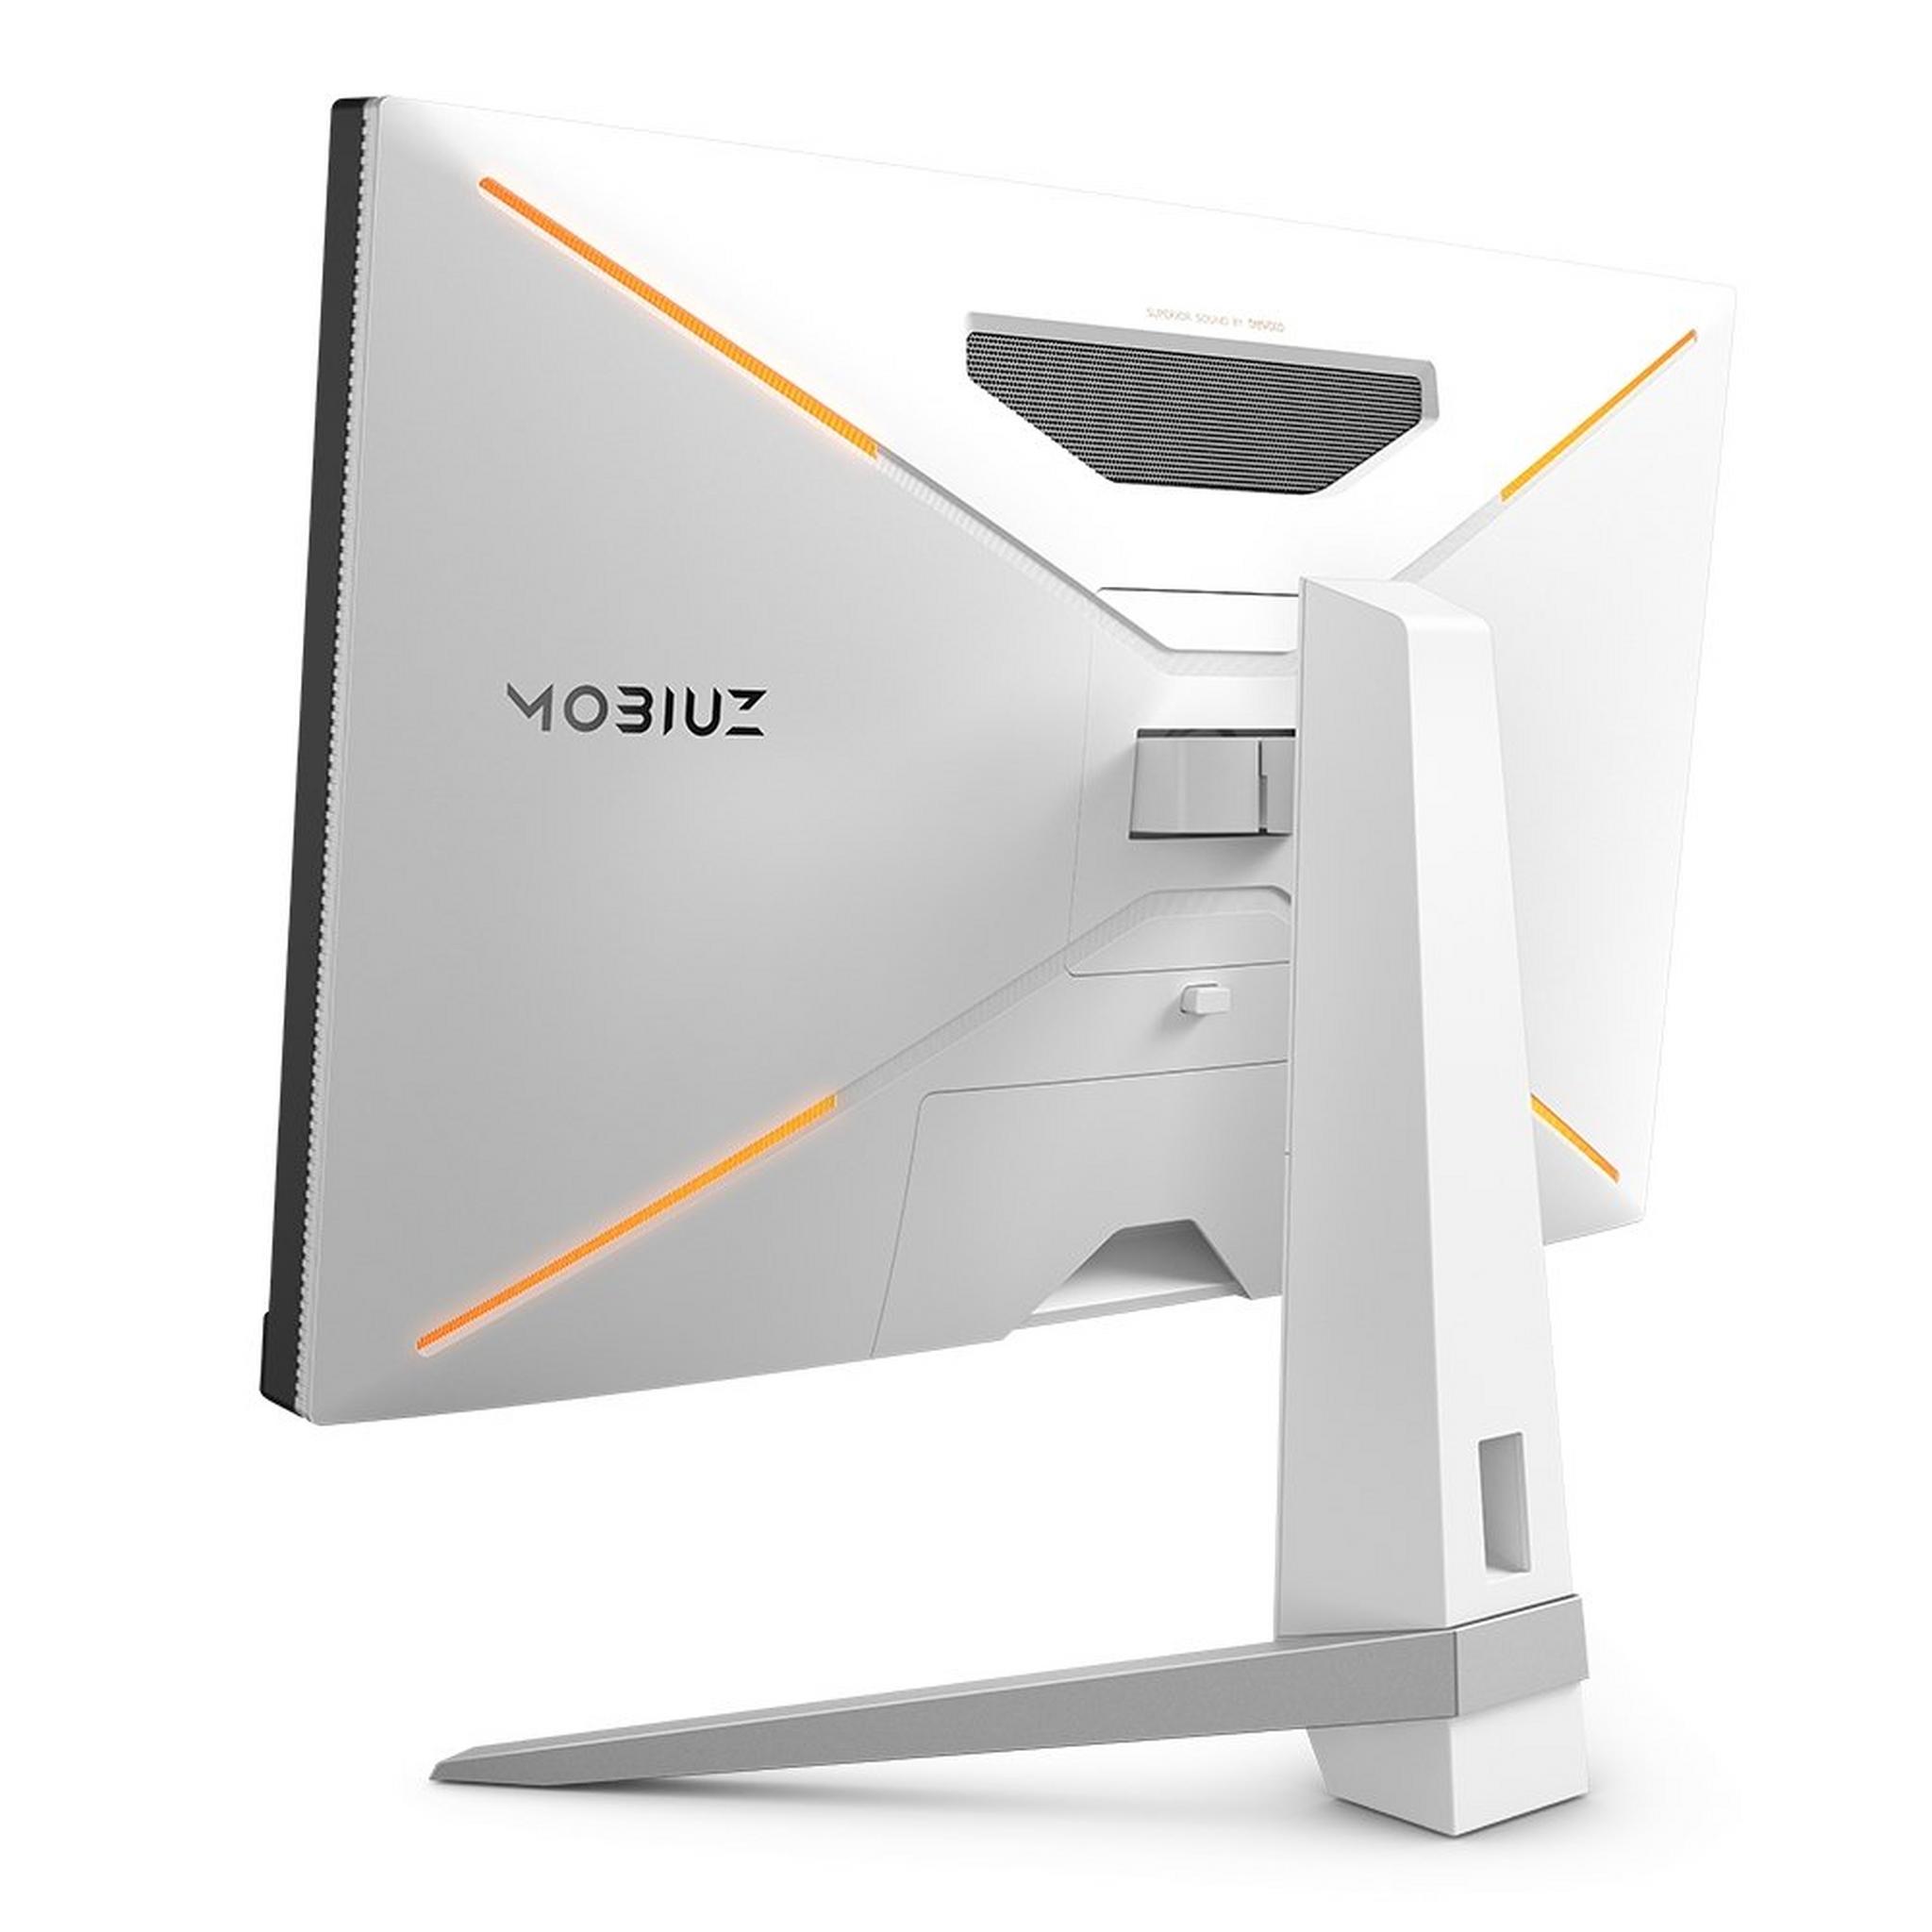 BenQ MOBIUZ 4K UHD Gaming Monitor, 32 inch, HDMI 2.1, 144HZ, 1MS, HDRi (EX3210U) - White